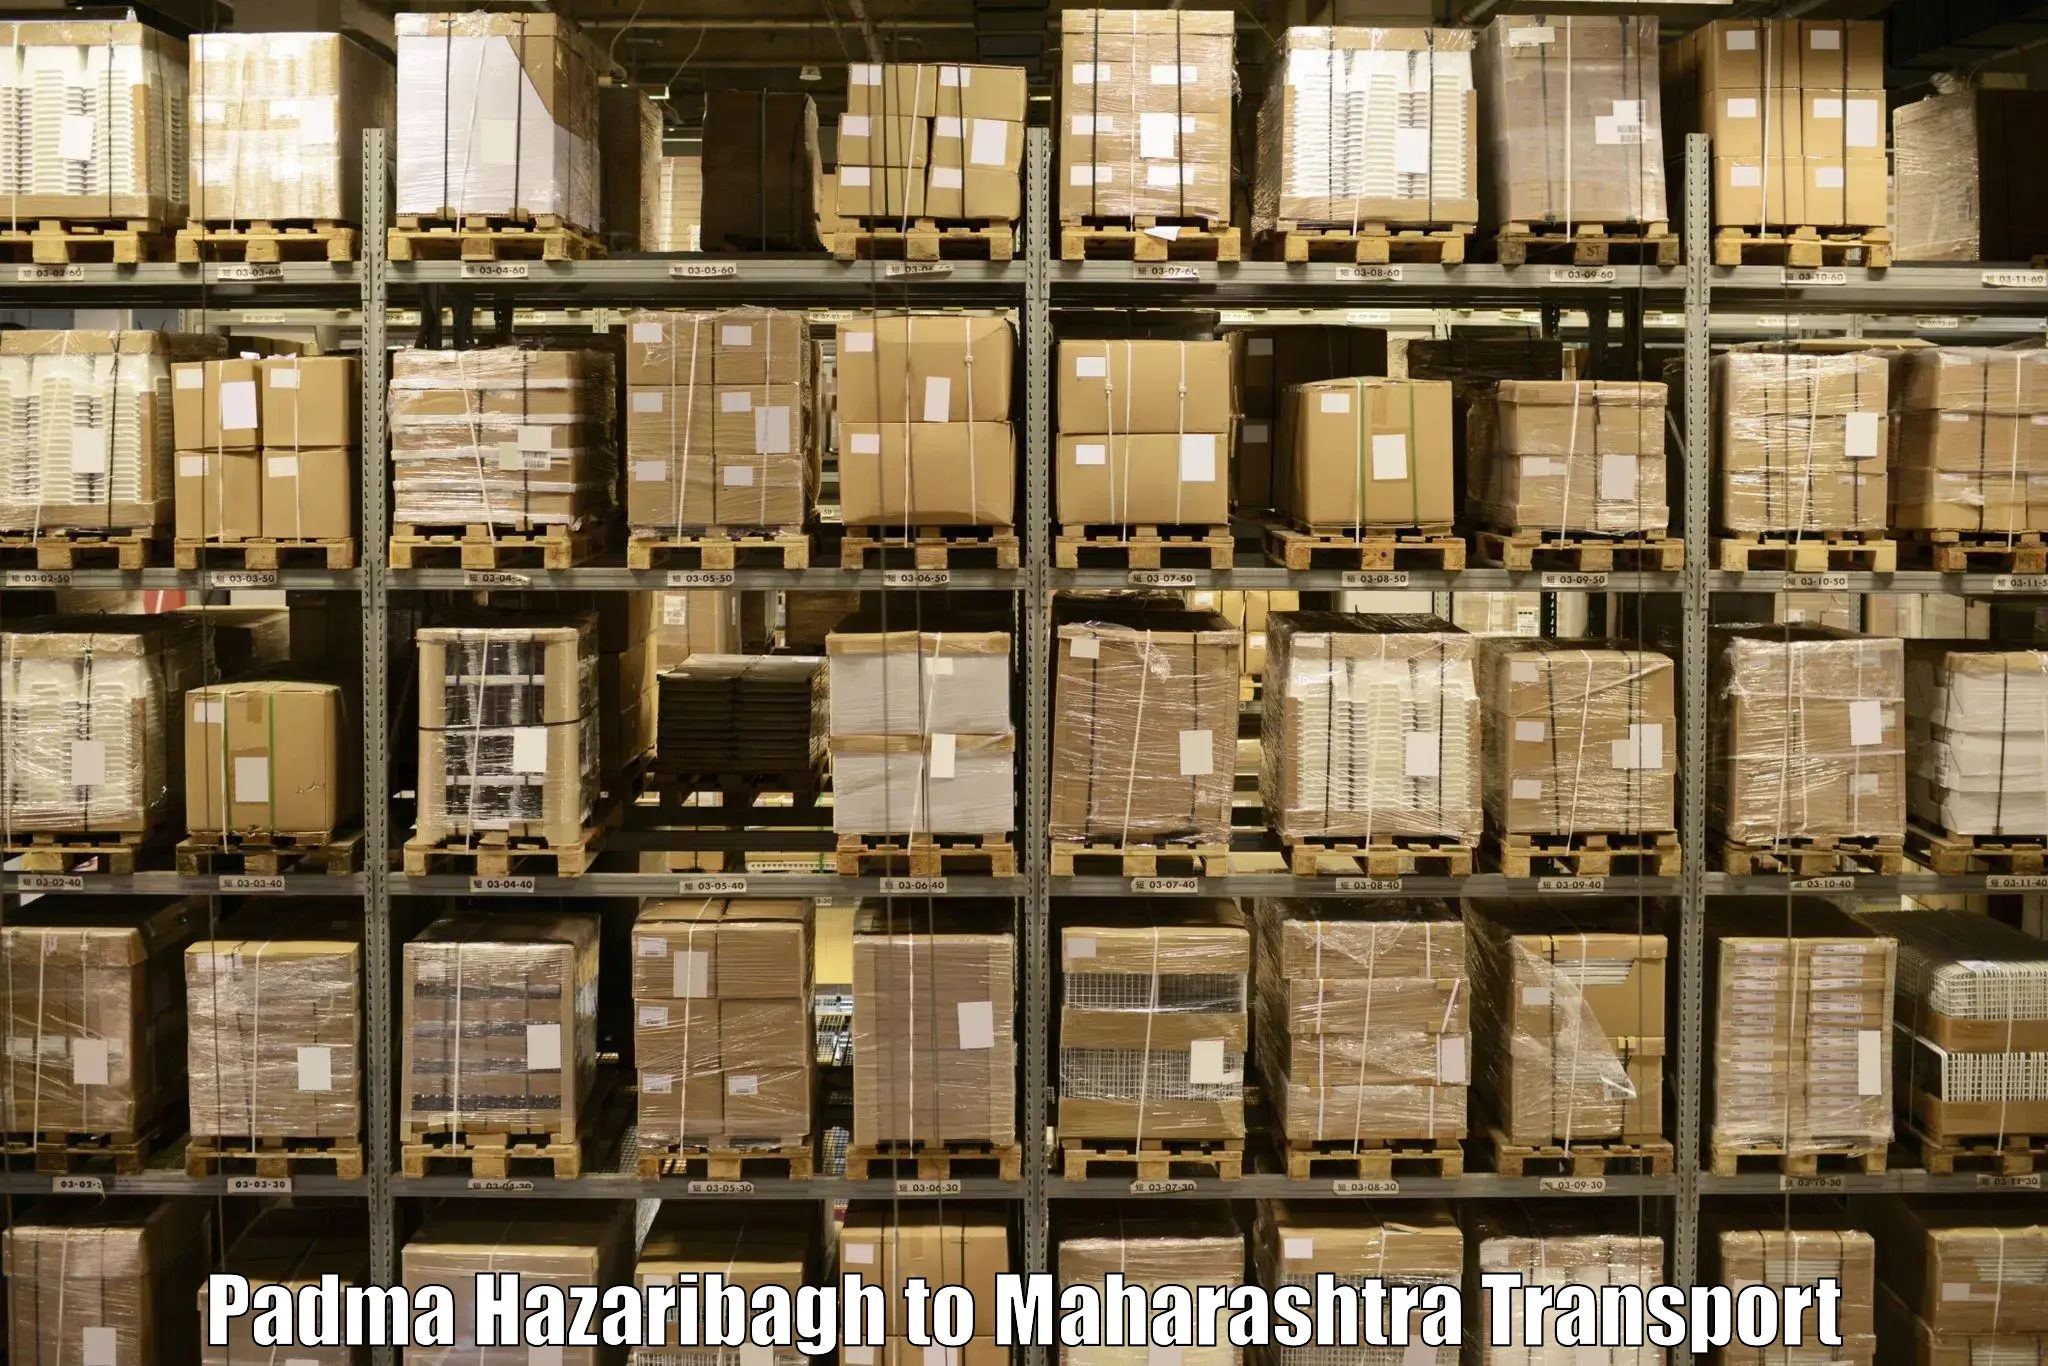 Truck transport companies in India Padma Hazaribagh to Brahmapuri